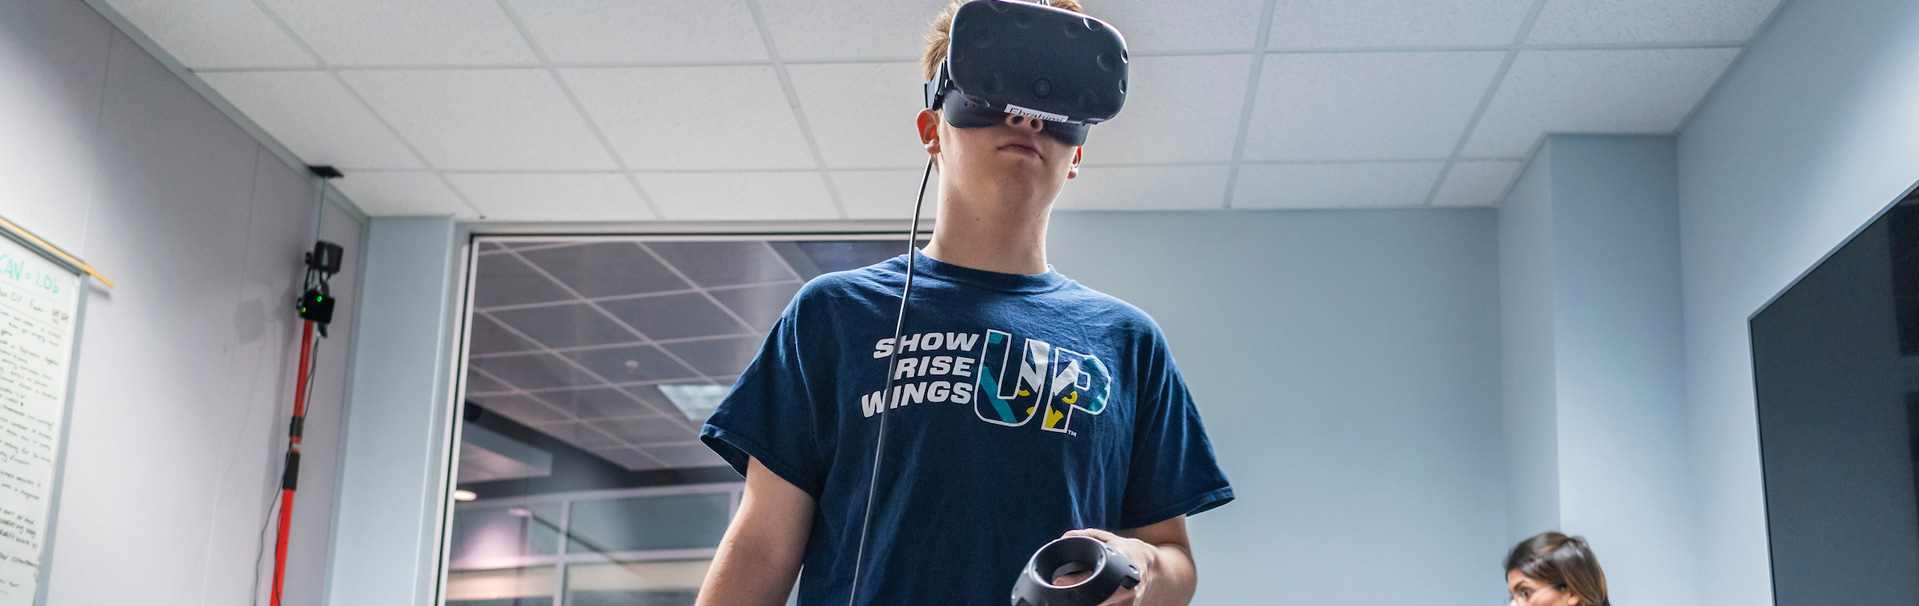 Digital Art student using VR Goggles